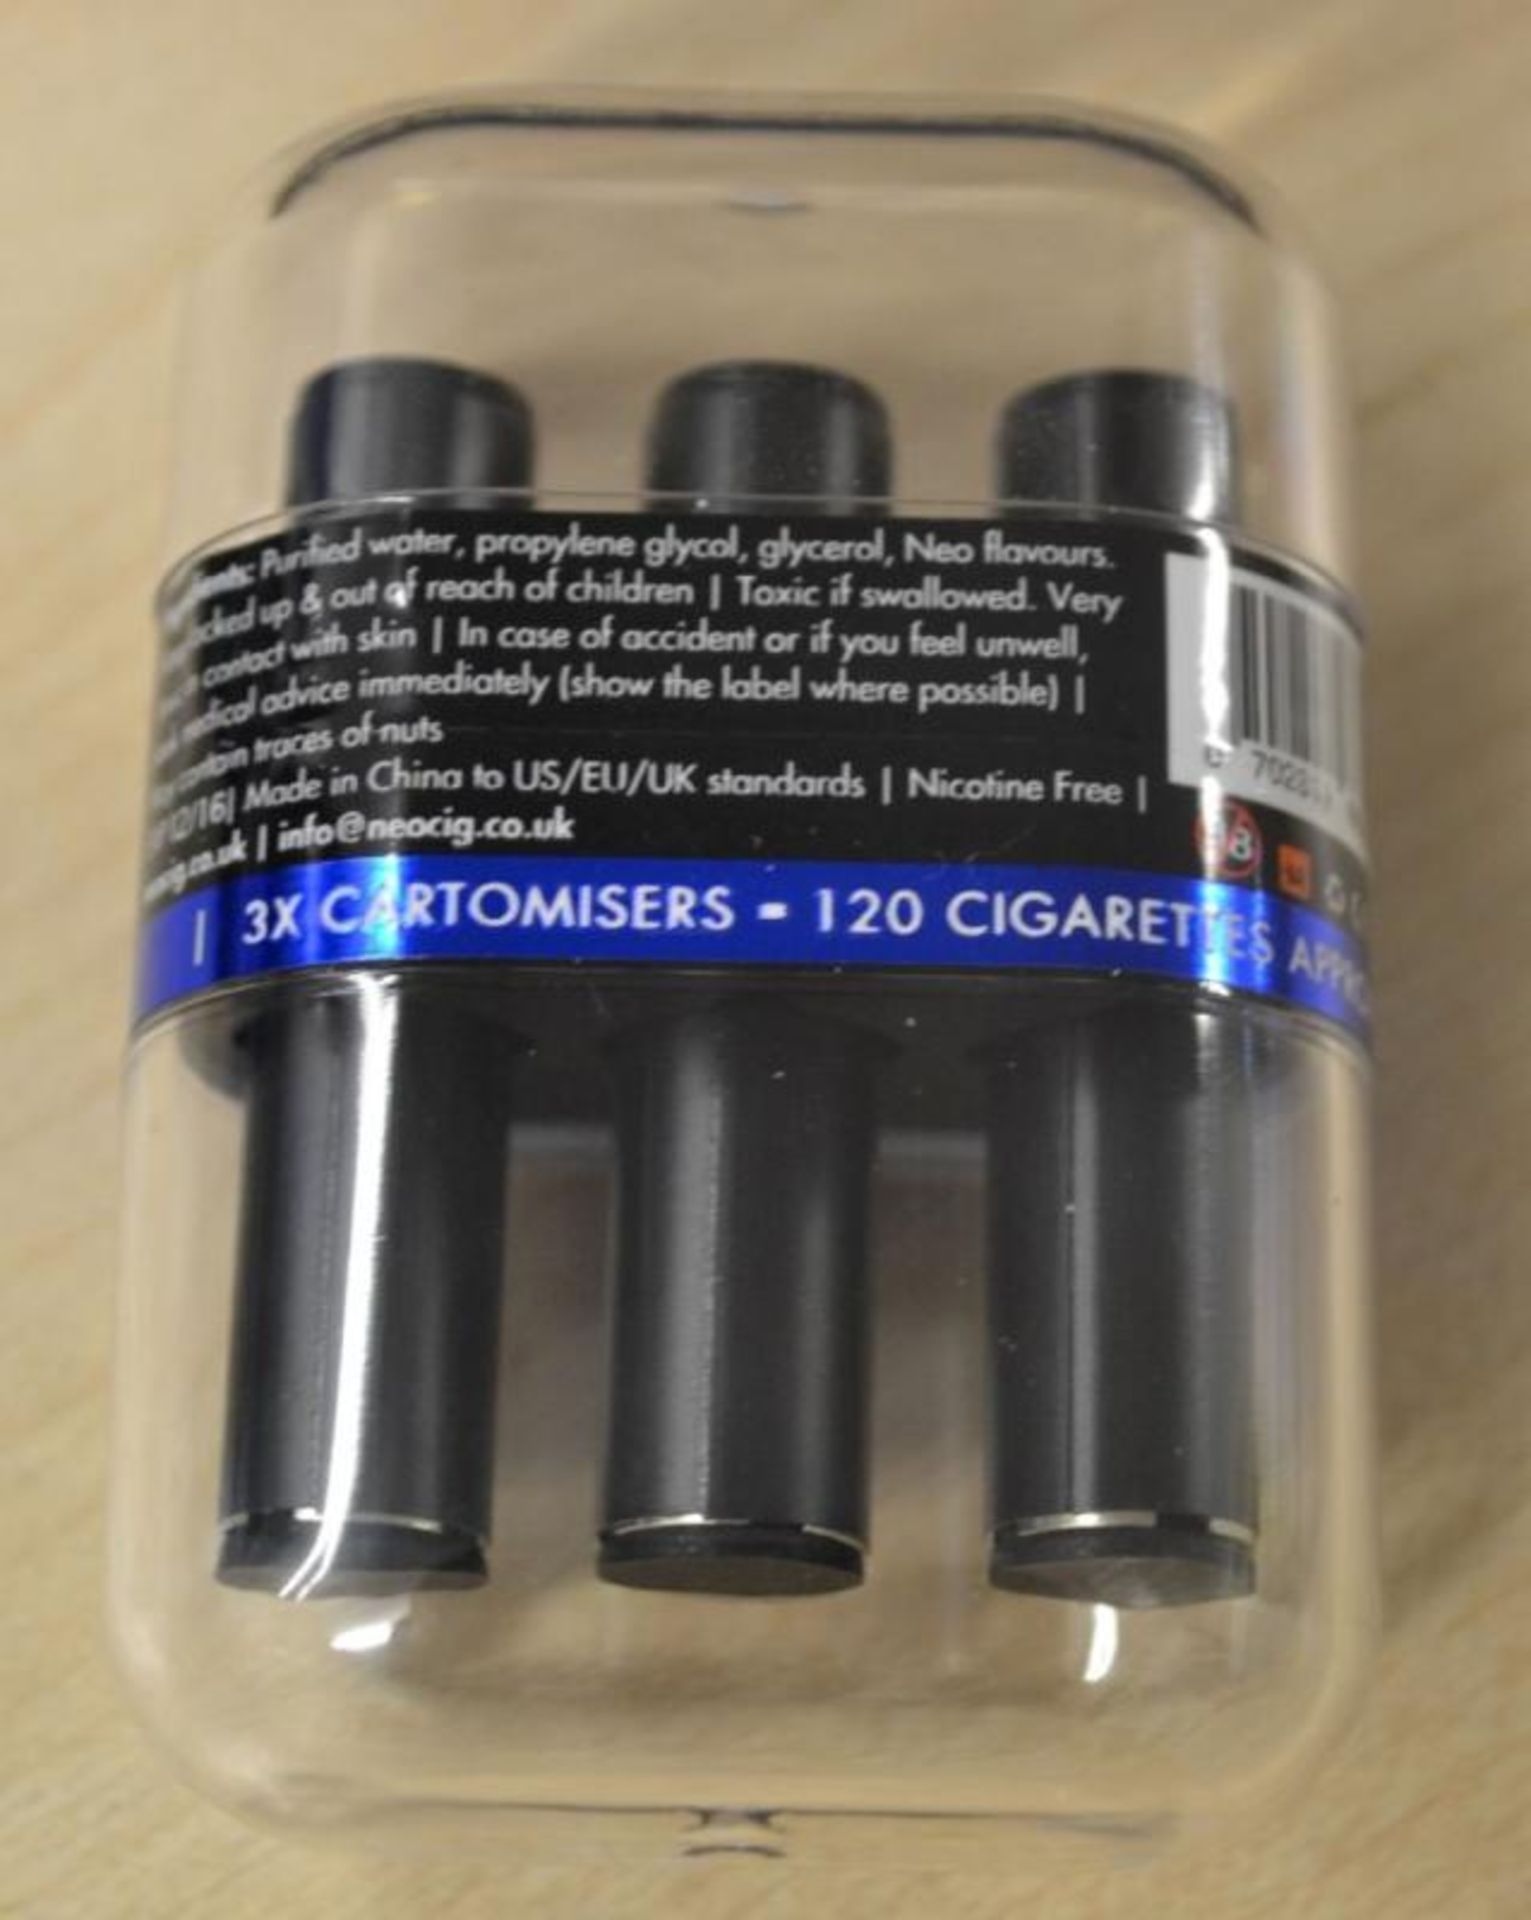 30 x Neo E-Cigarettes Neo Infinity Tobacco Zero Refill Packs - New & Sealed Stock - CL185 - Ref: DRT - Image 2 of 9